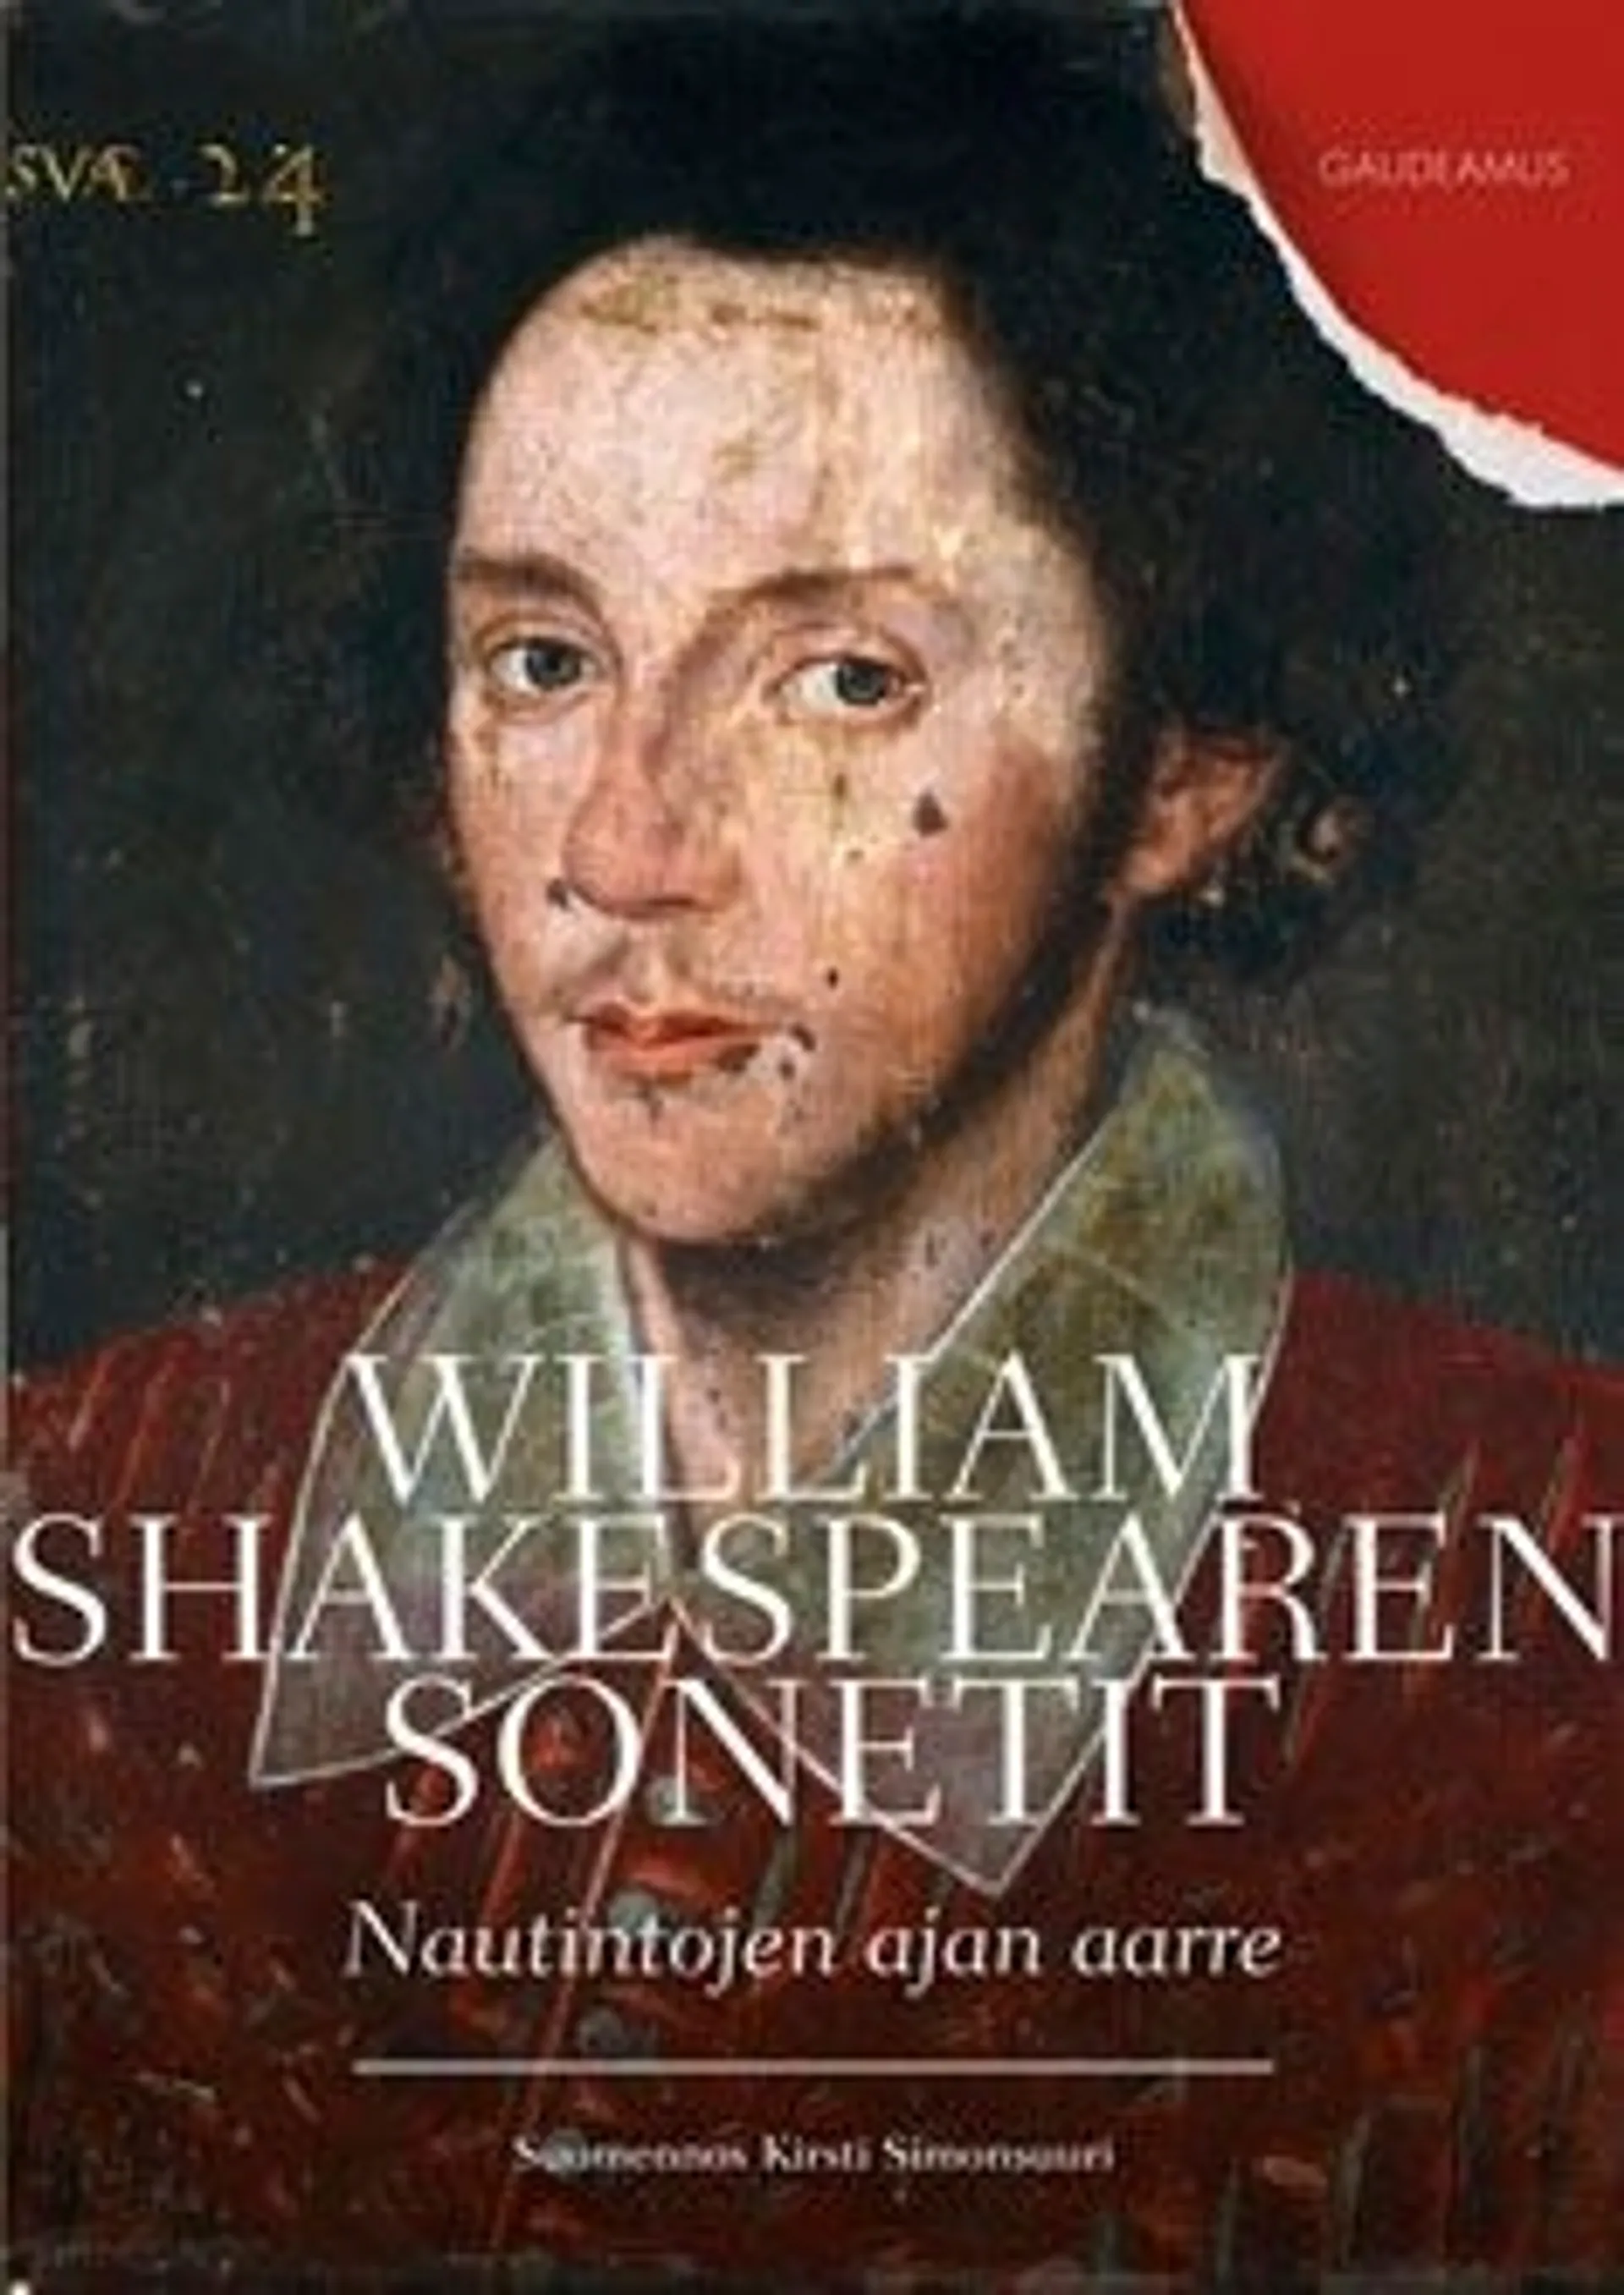 Shakespeare, William Shakespearen sonetit